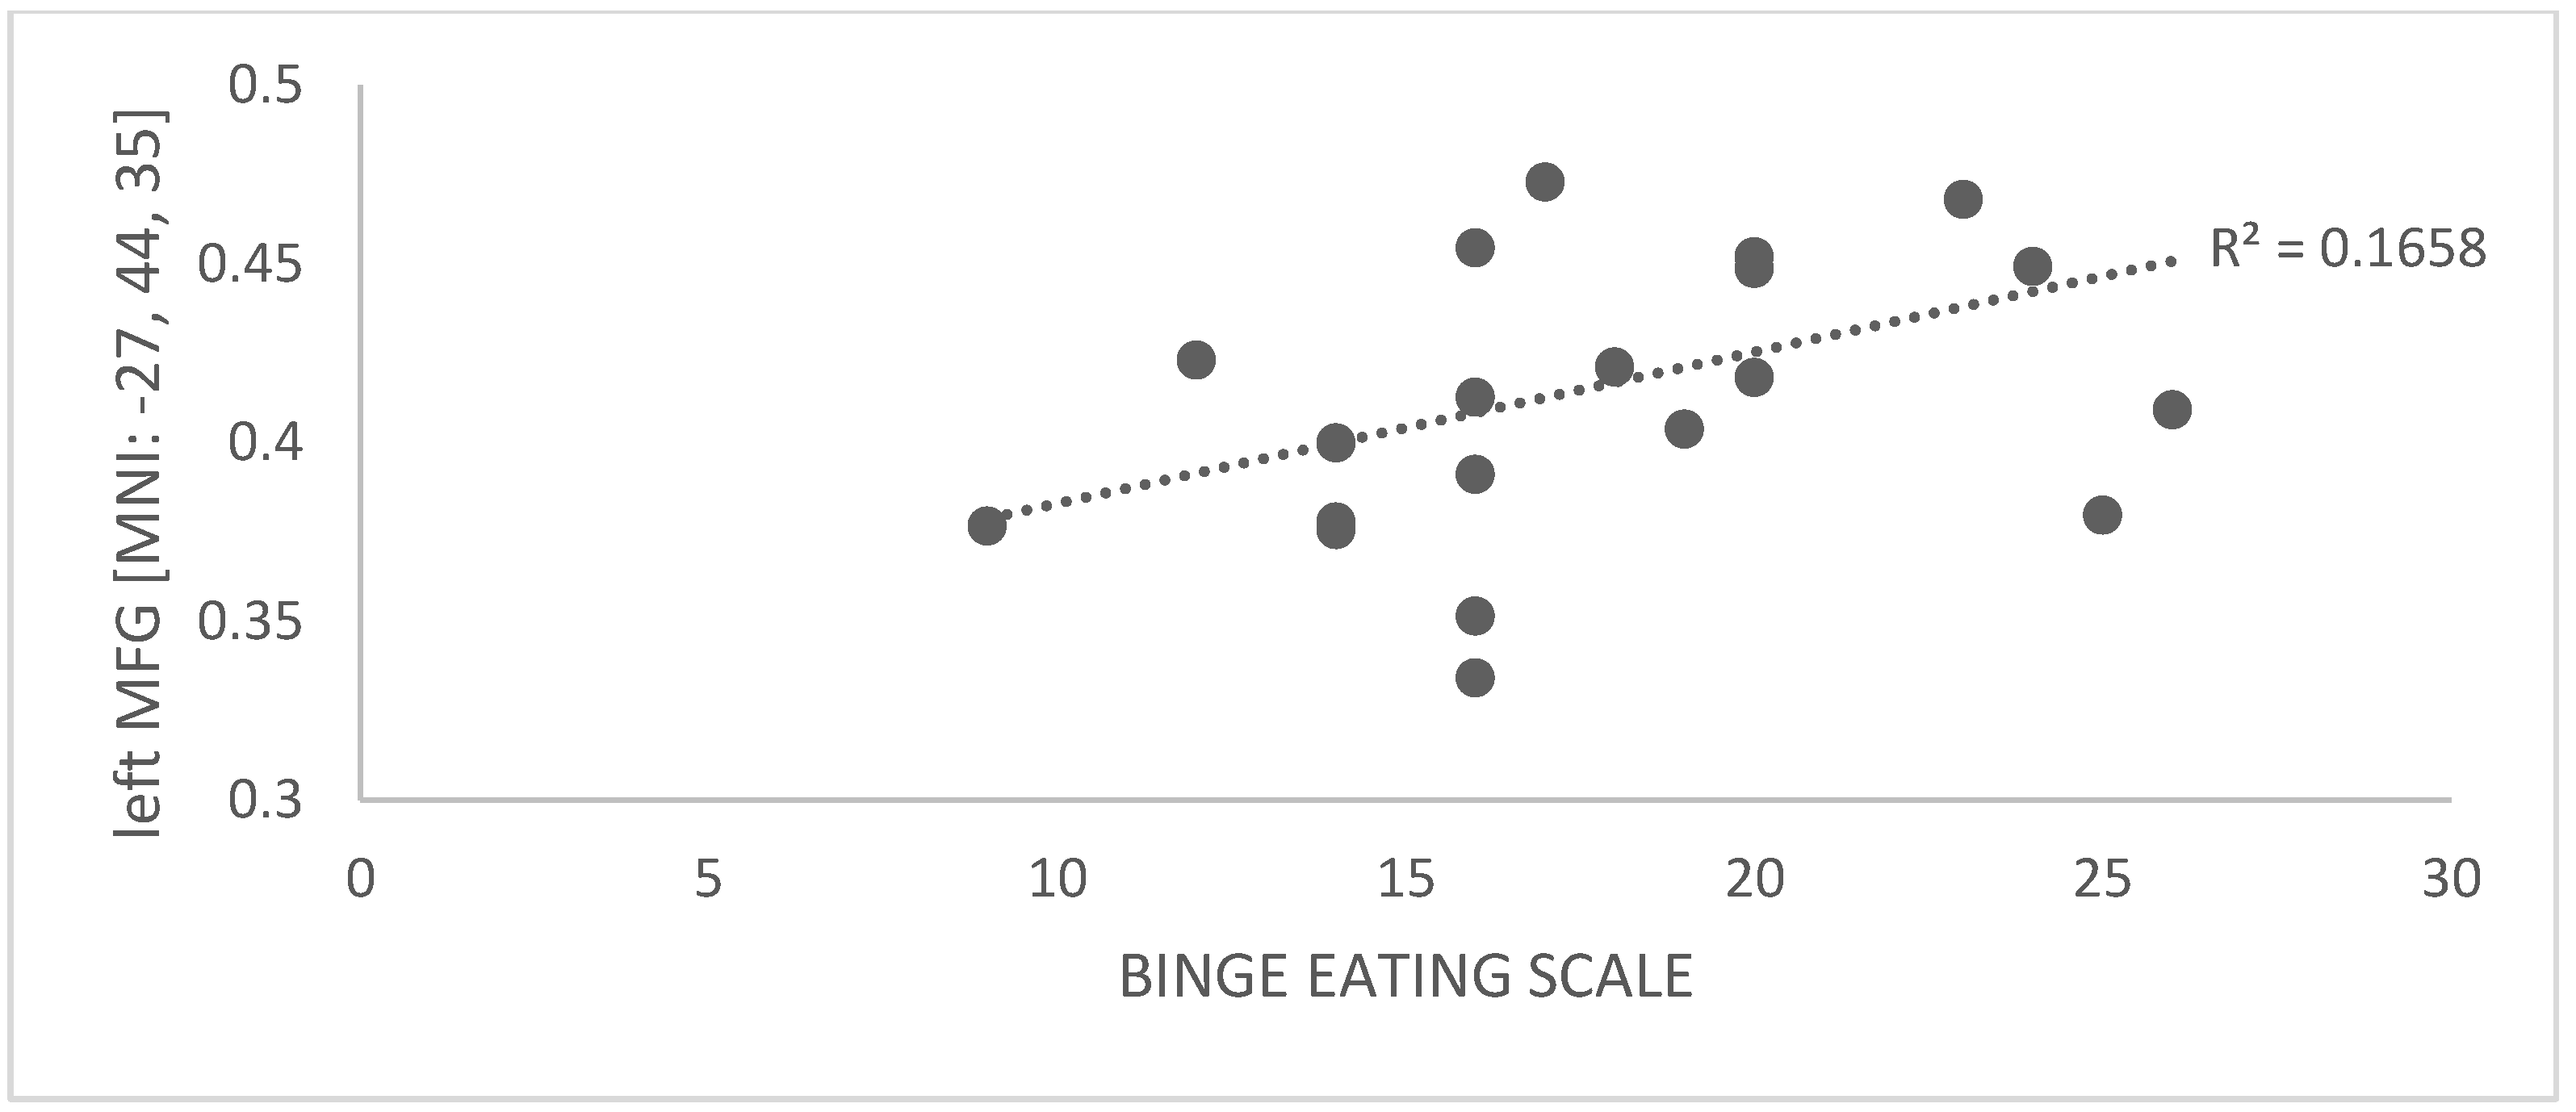 binge eating scale spss code